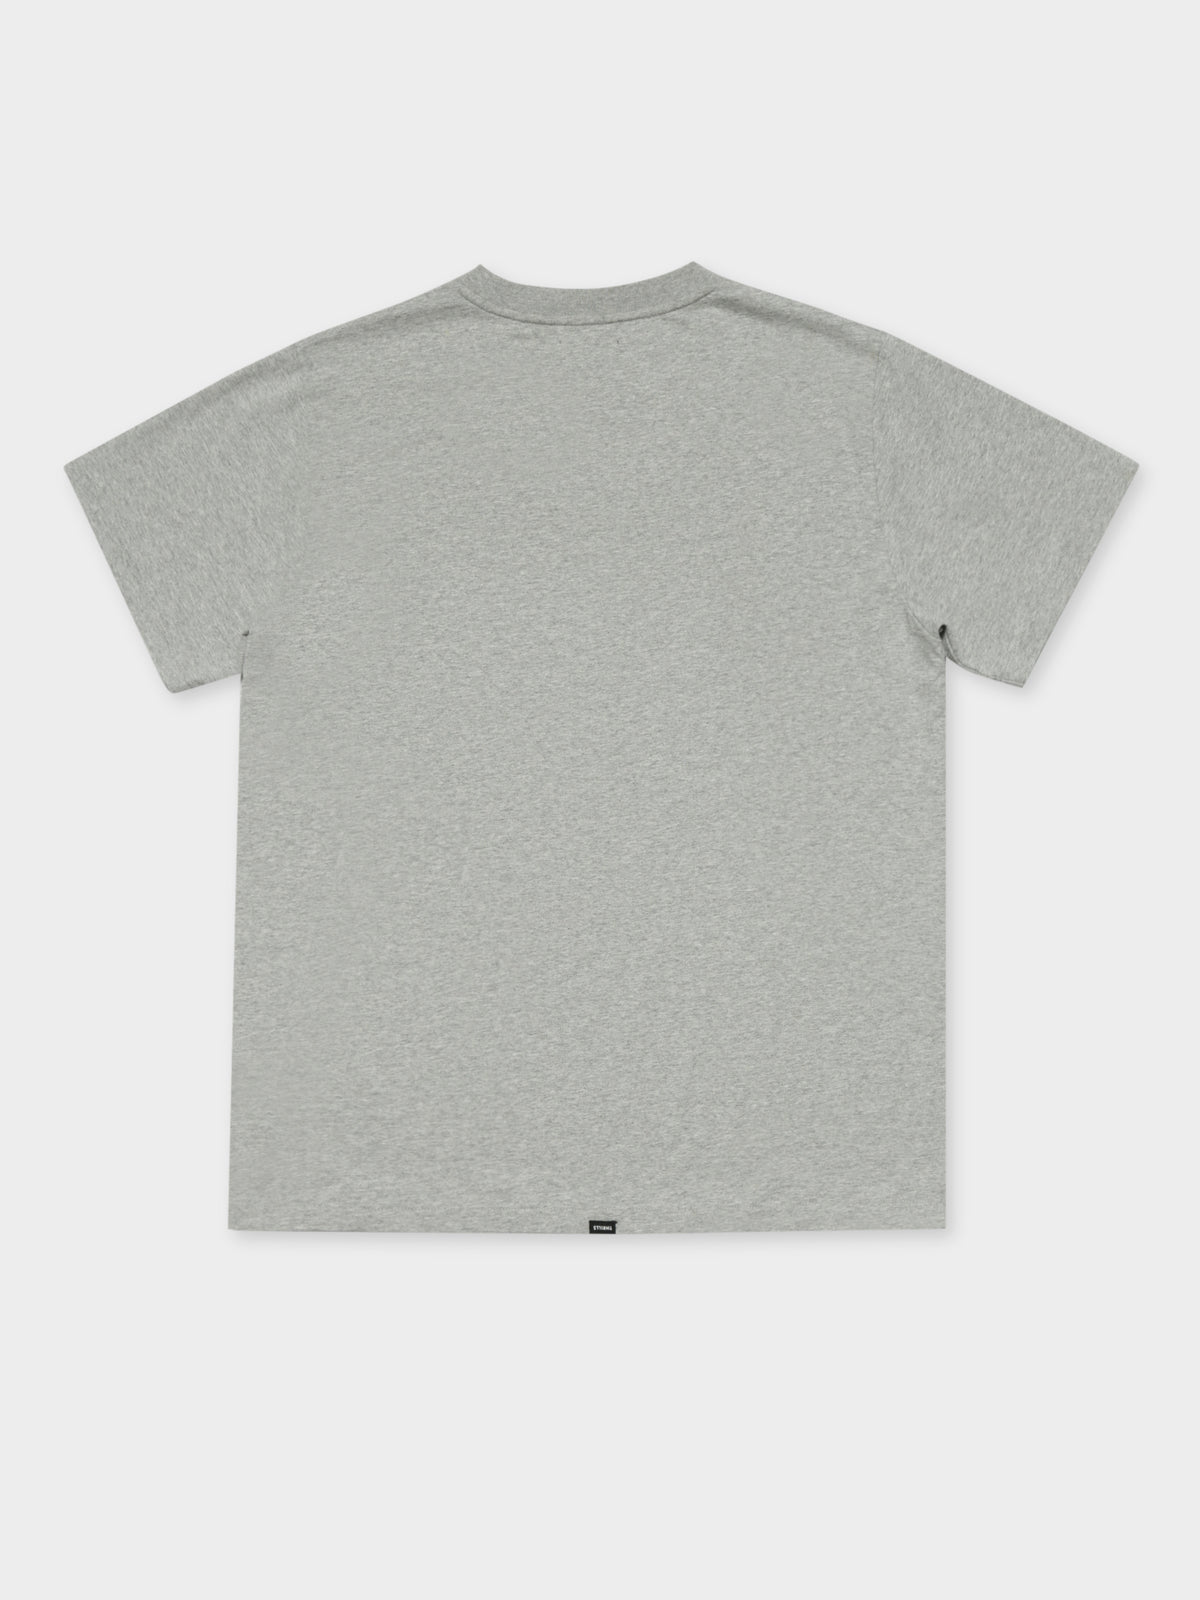 Bad Luck Merch T-Shirt in Grey Marle